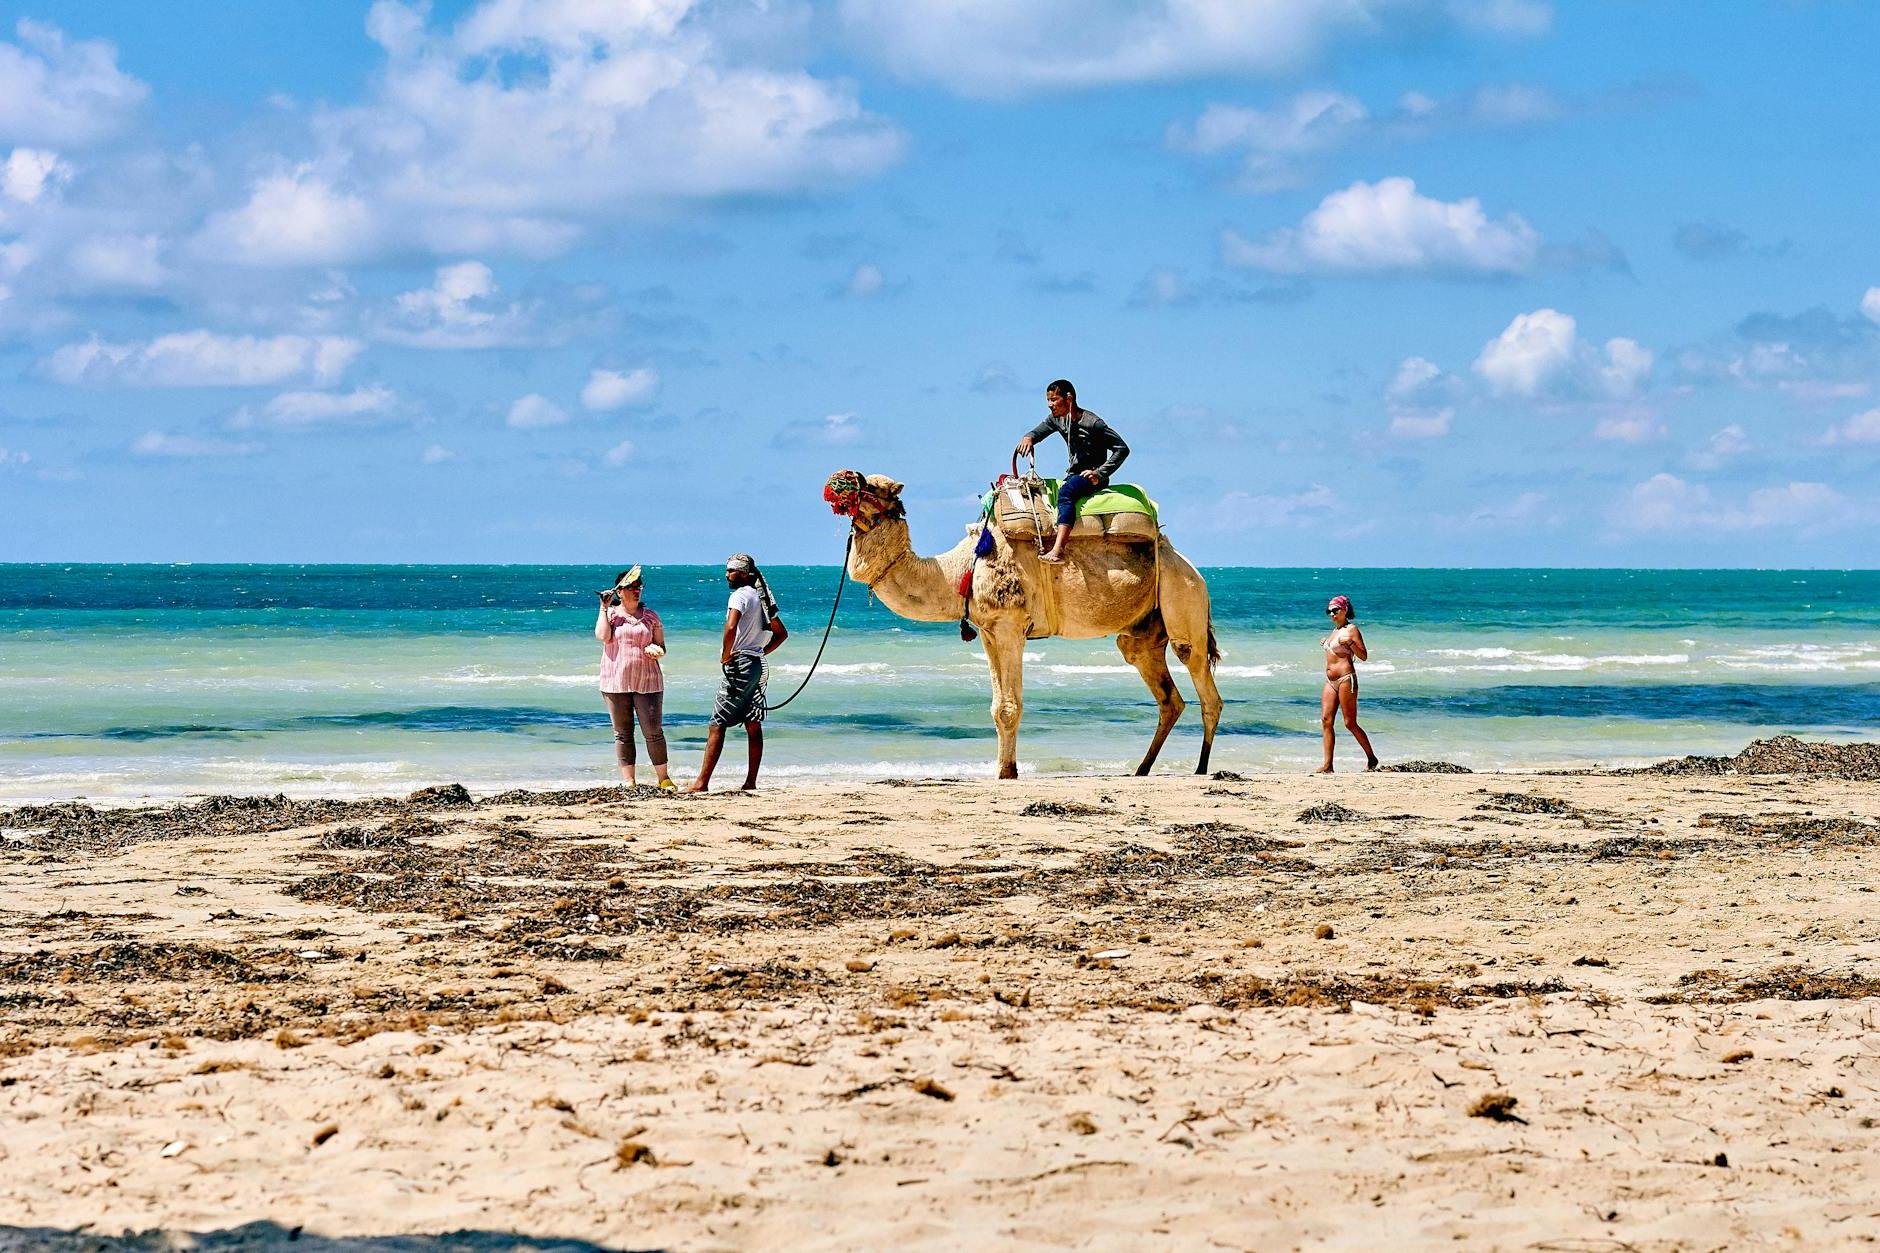 A Man Riding a Camel at the Beach